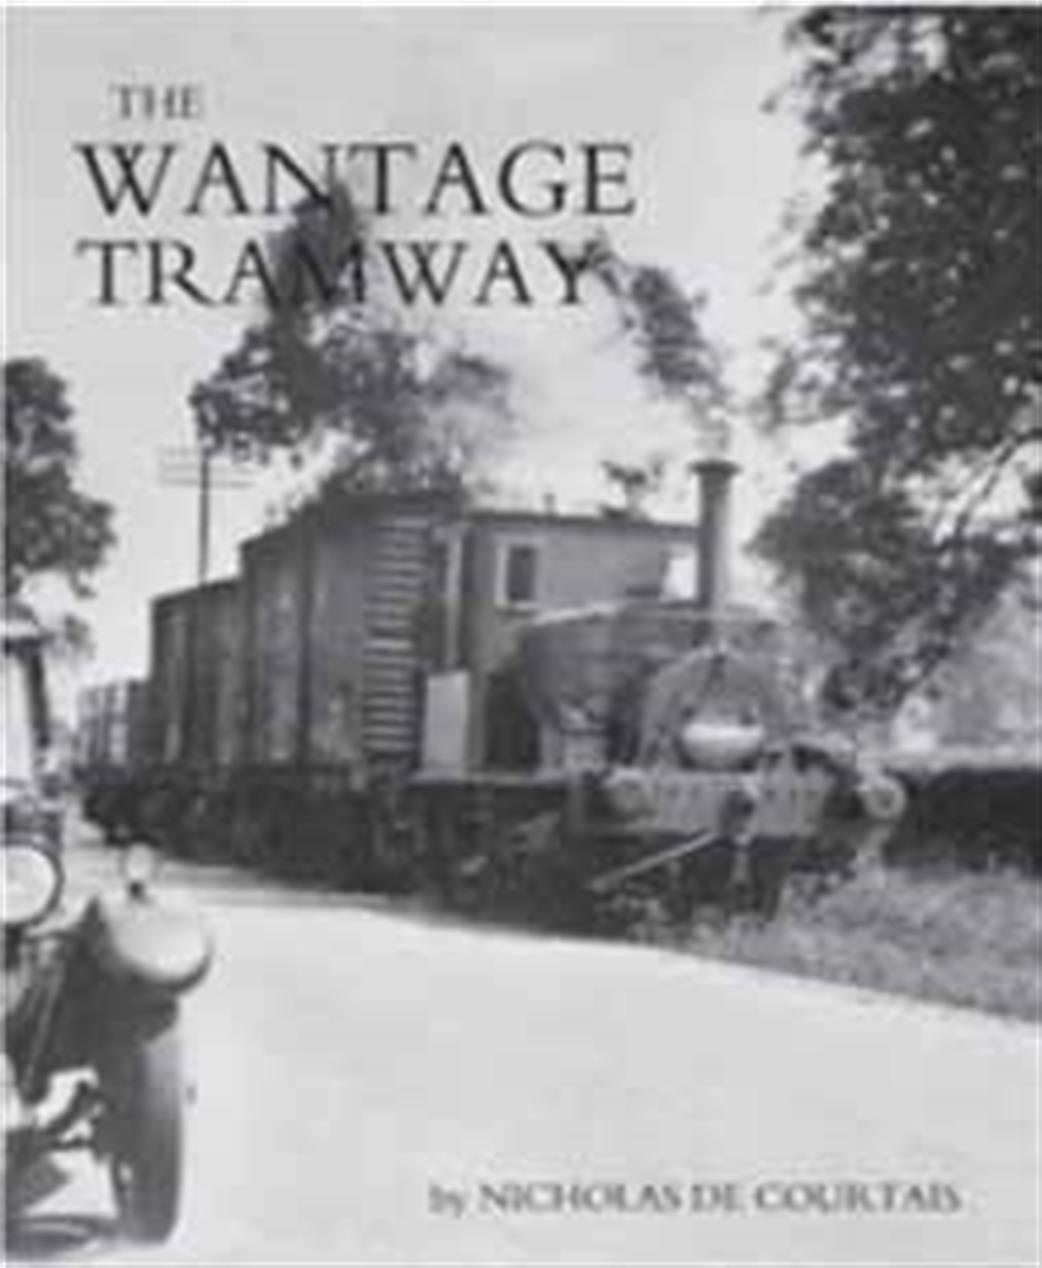 Wild Swan  wantage The Wantage Tramway by Nicholais de Courtais